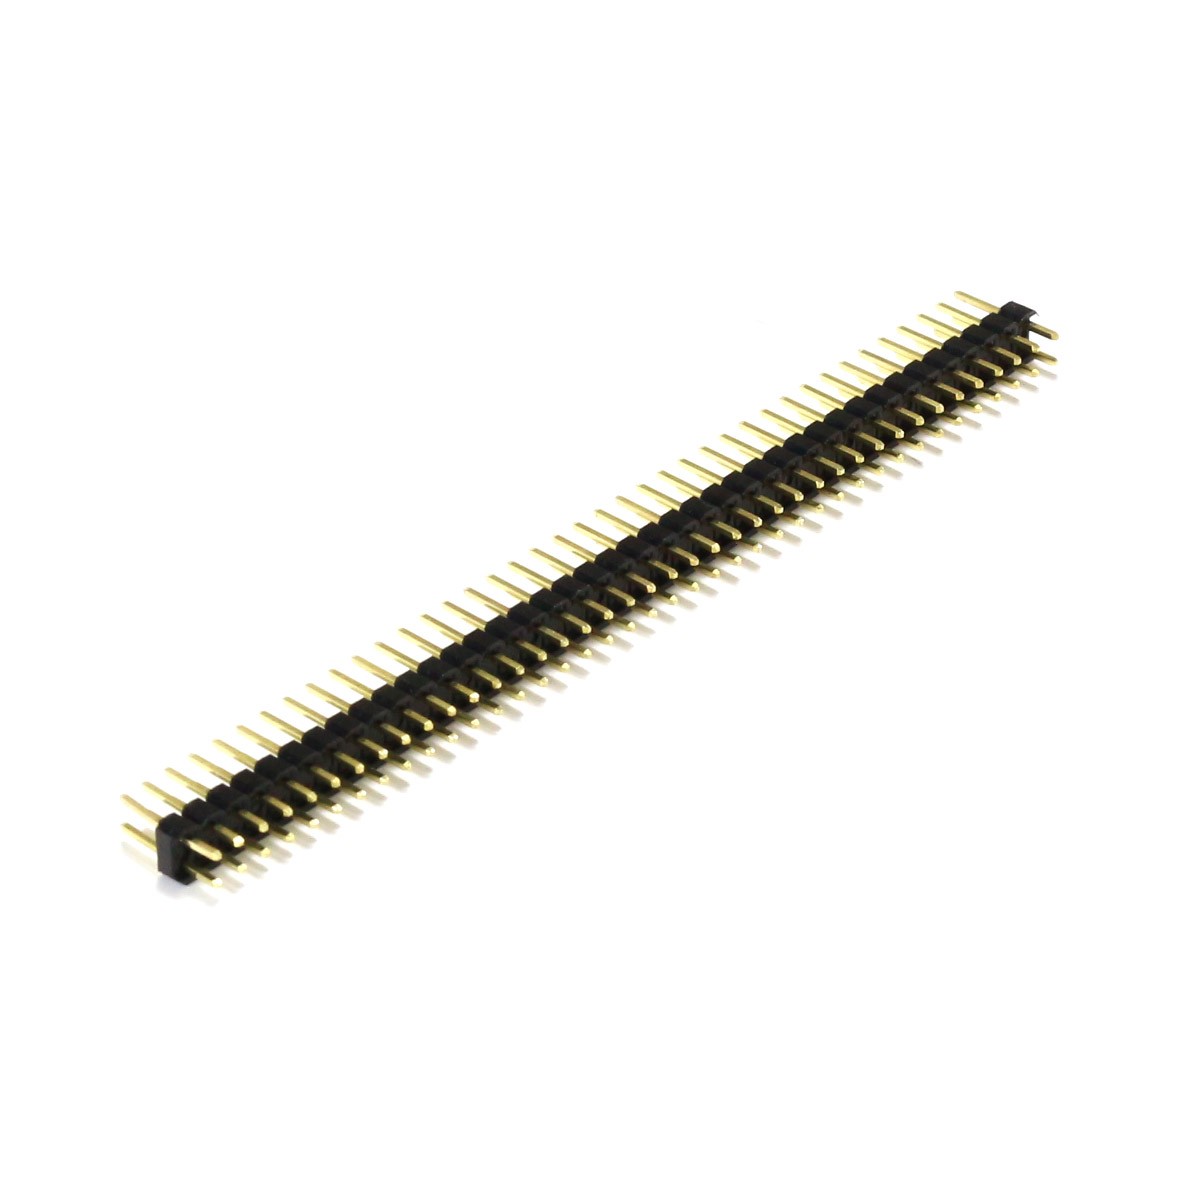 2.54mm Male Pin Header Pin Header 2x40 Pins 5.5mm Gold-Plated (Unit)